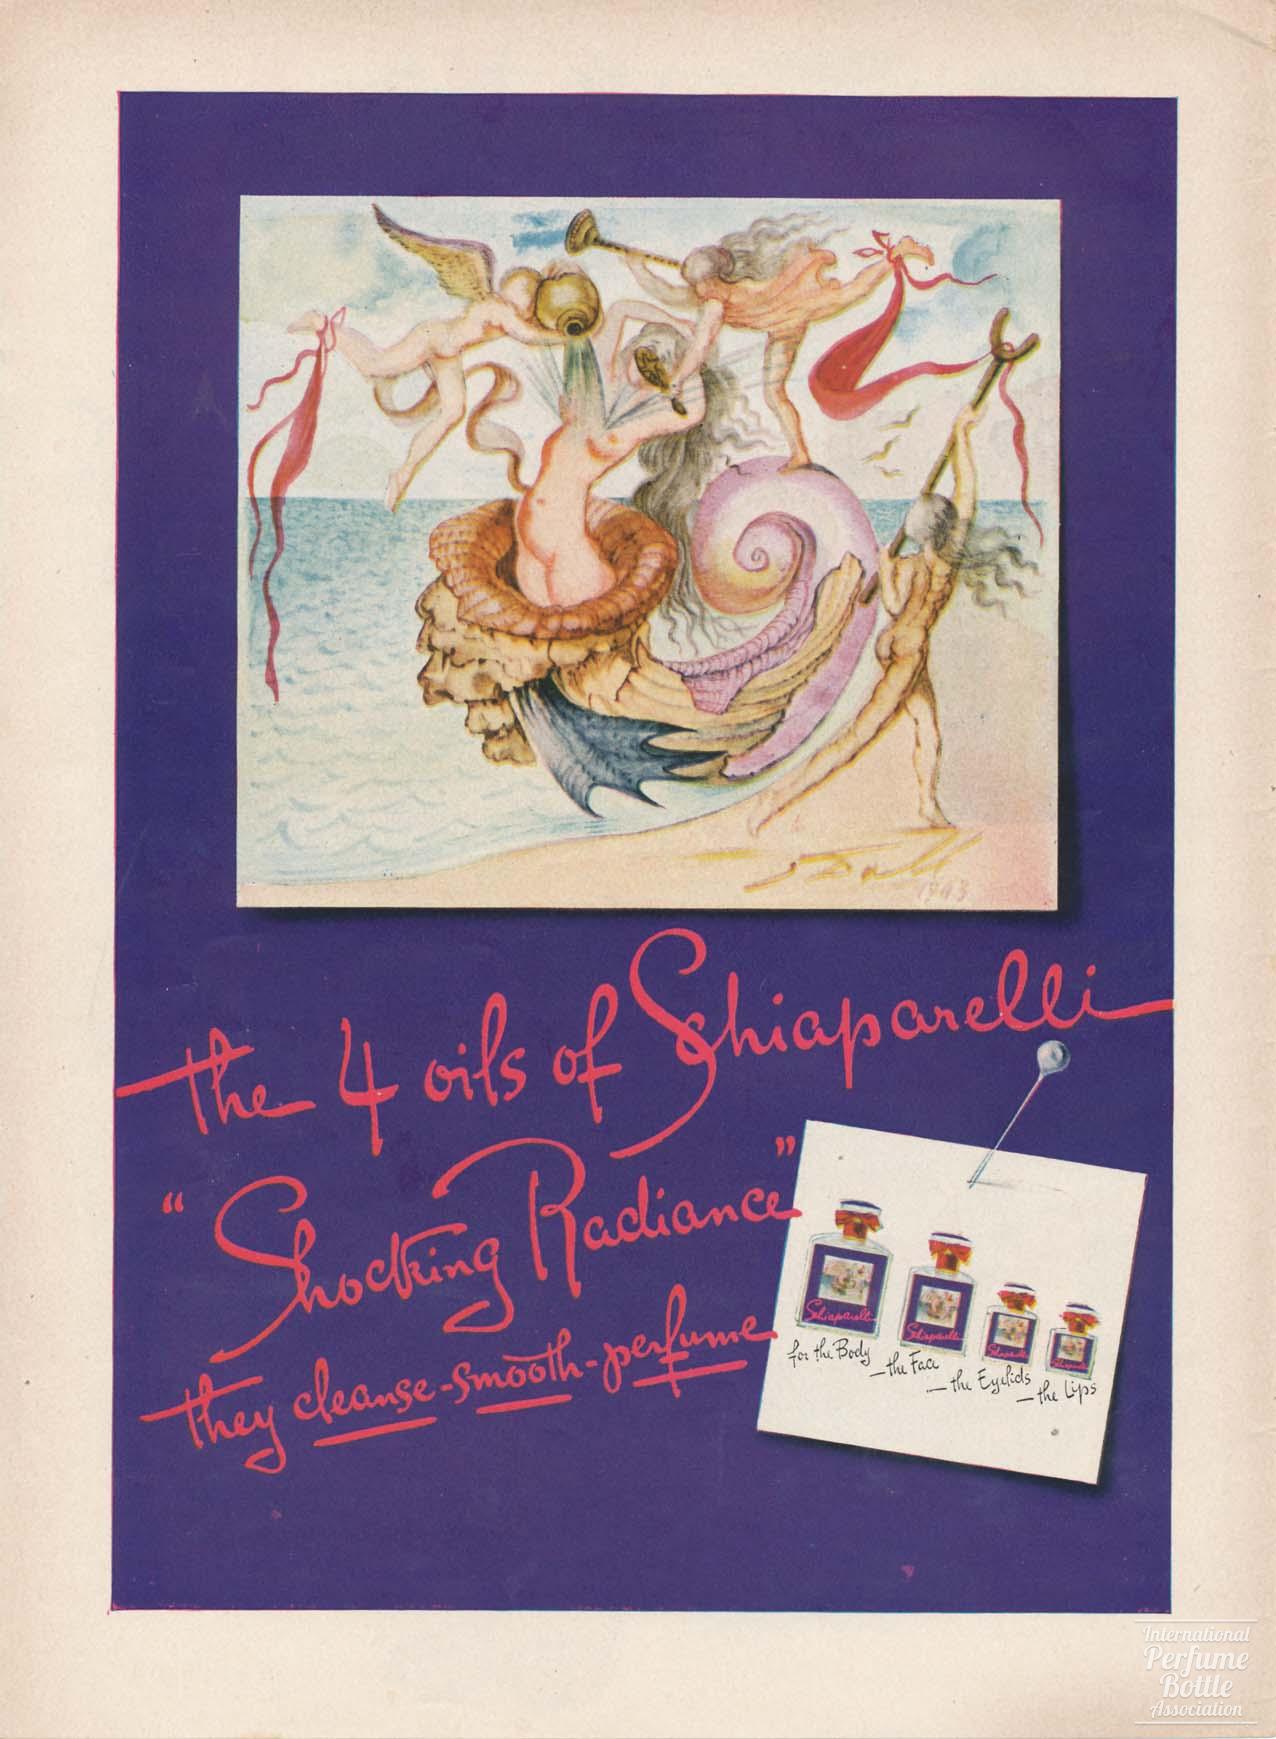 "Shocking Radiance" Oils by Schiaparelli Advertisement - 1946